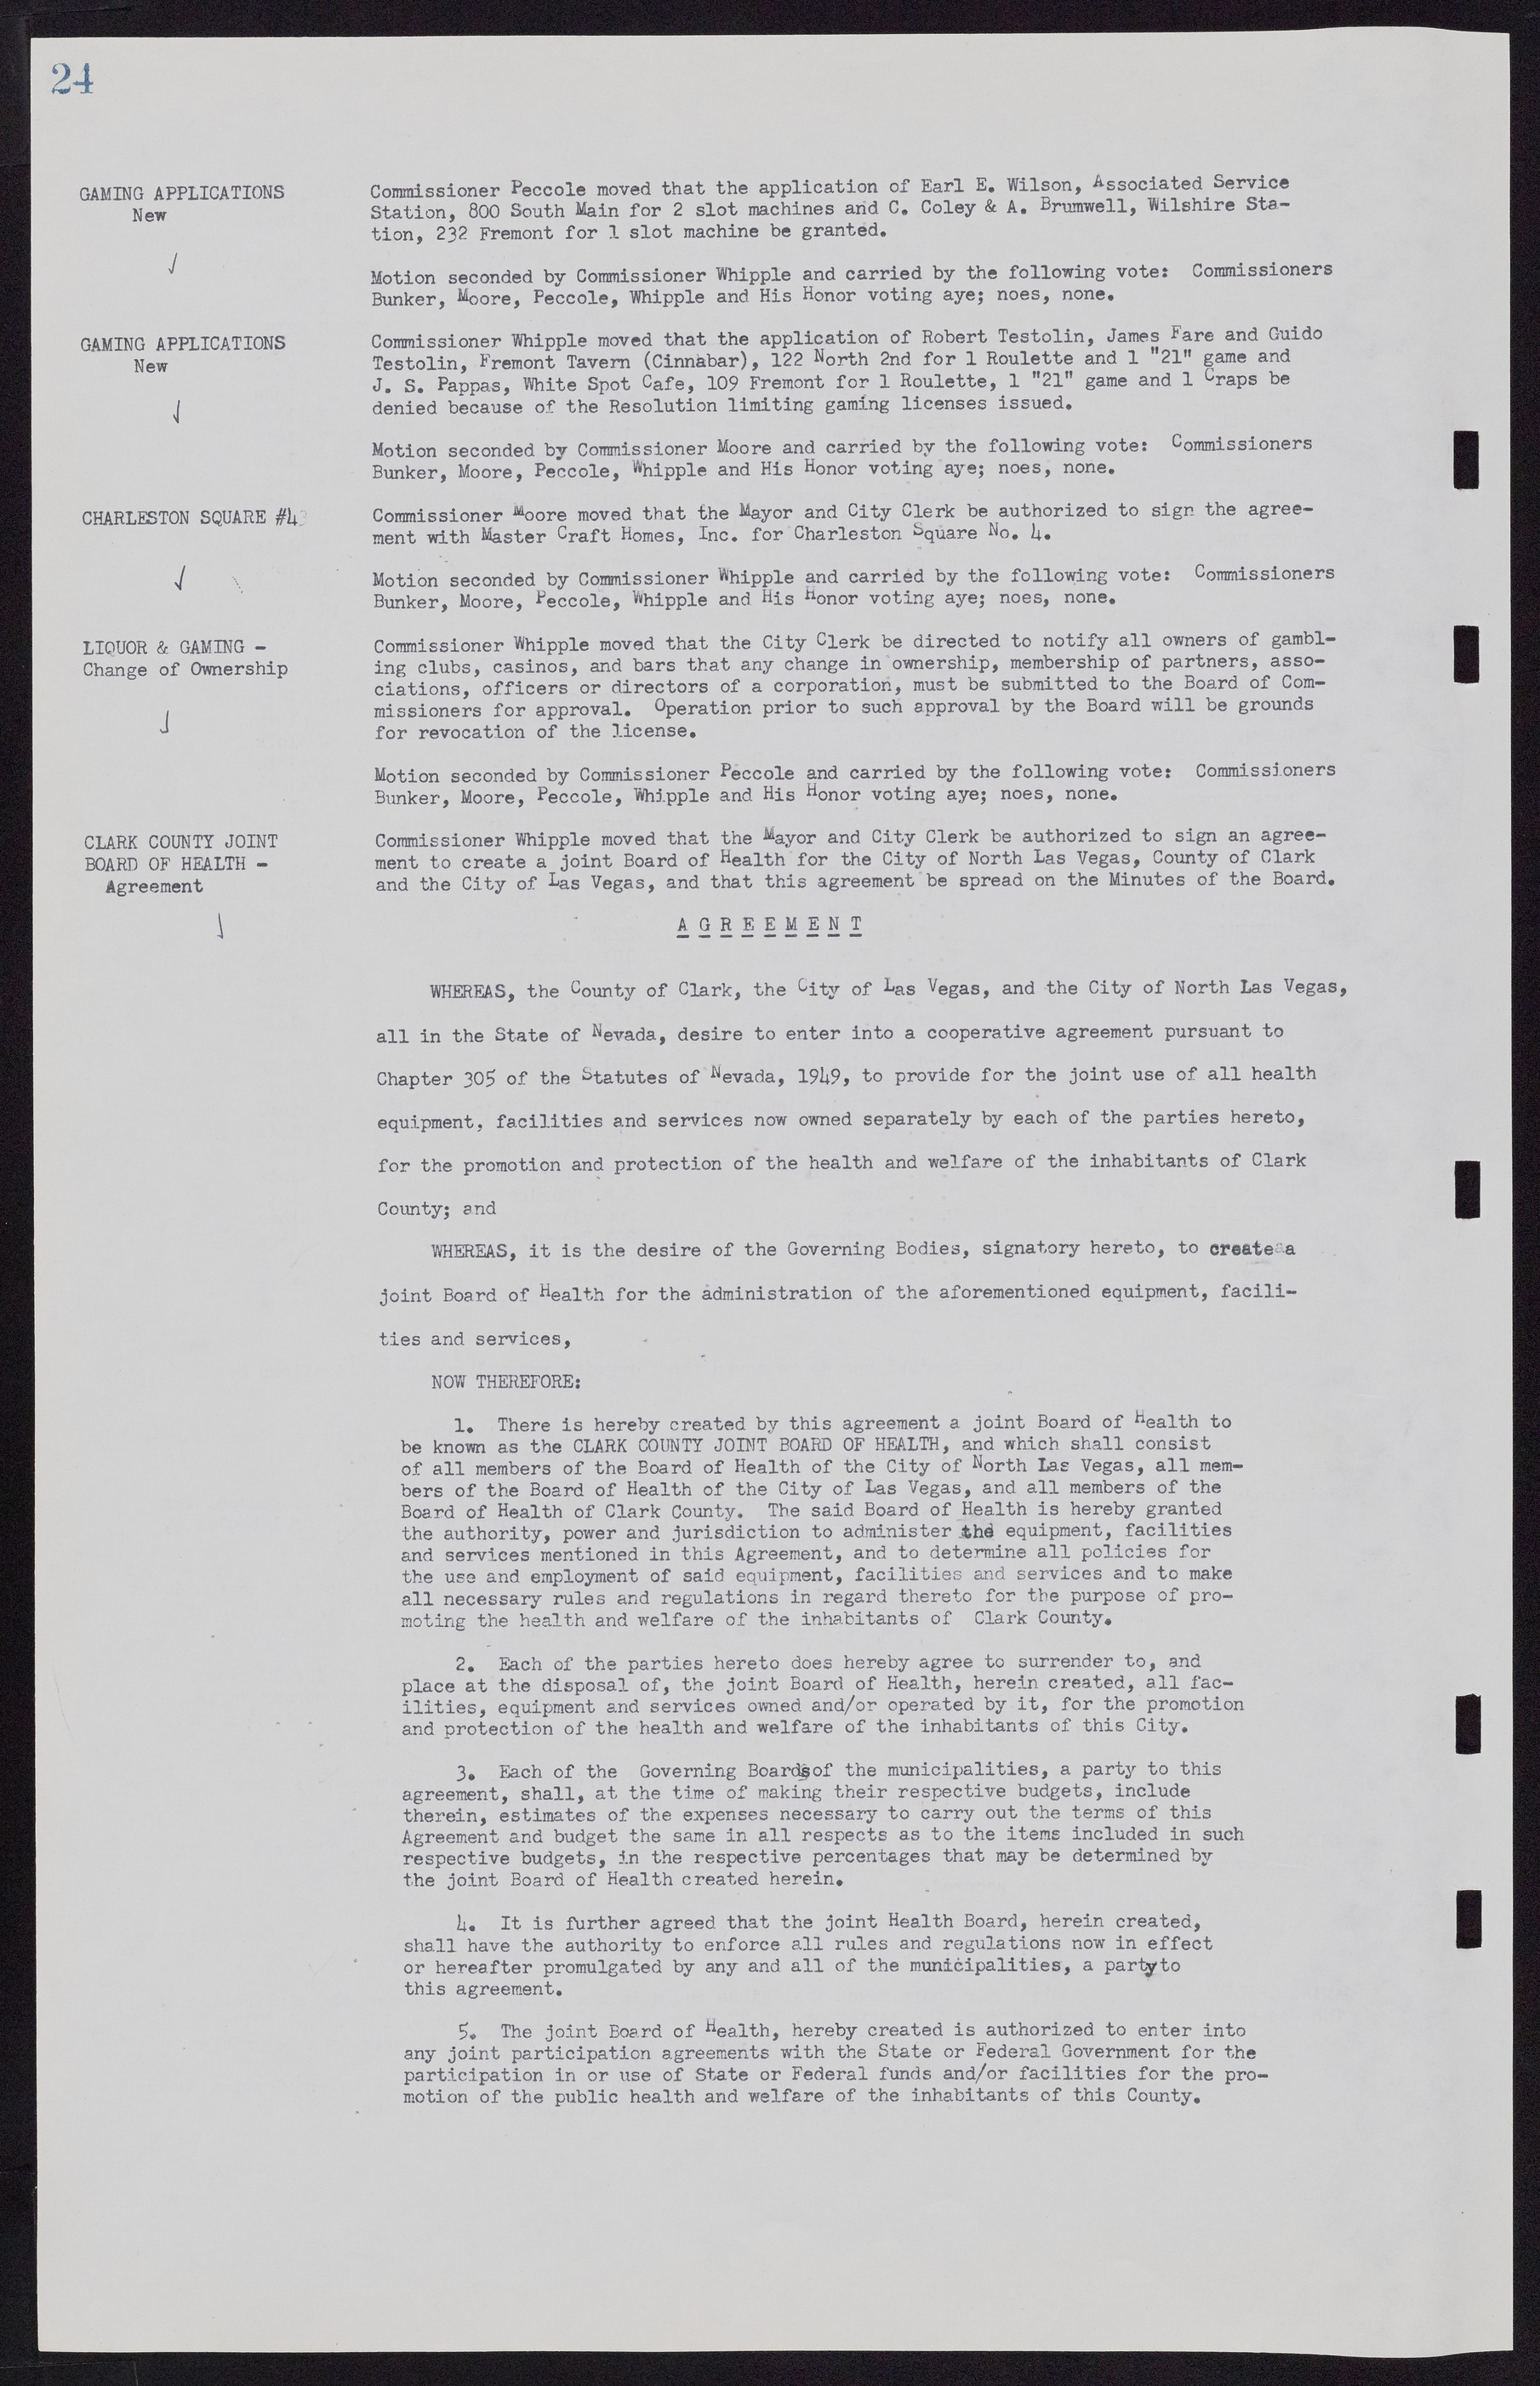 Las Vegas City Commission Minutes, November 7, 1949 to May 21, 1952, lvc000007-30